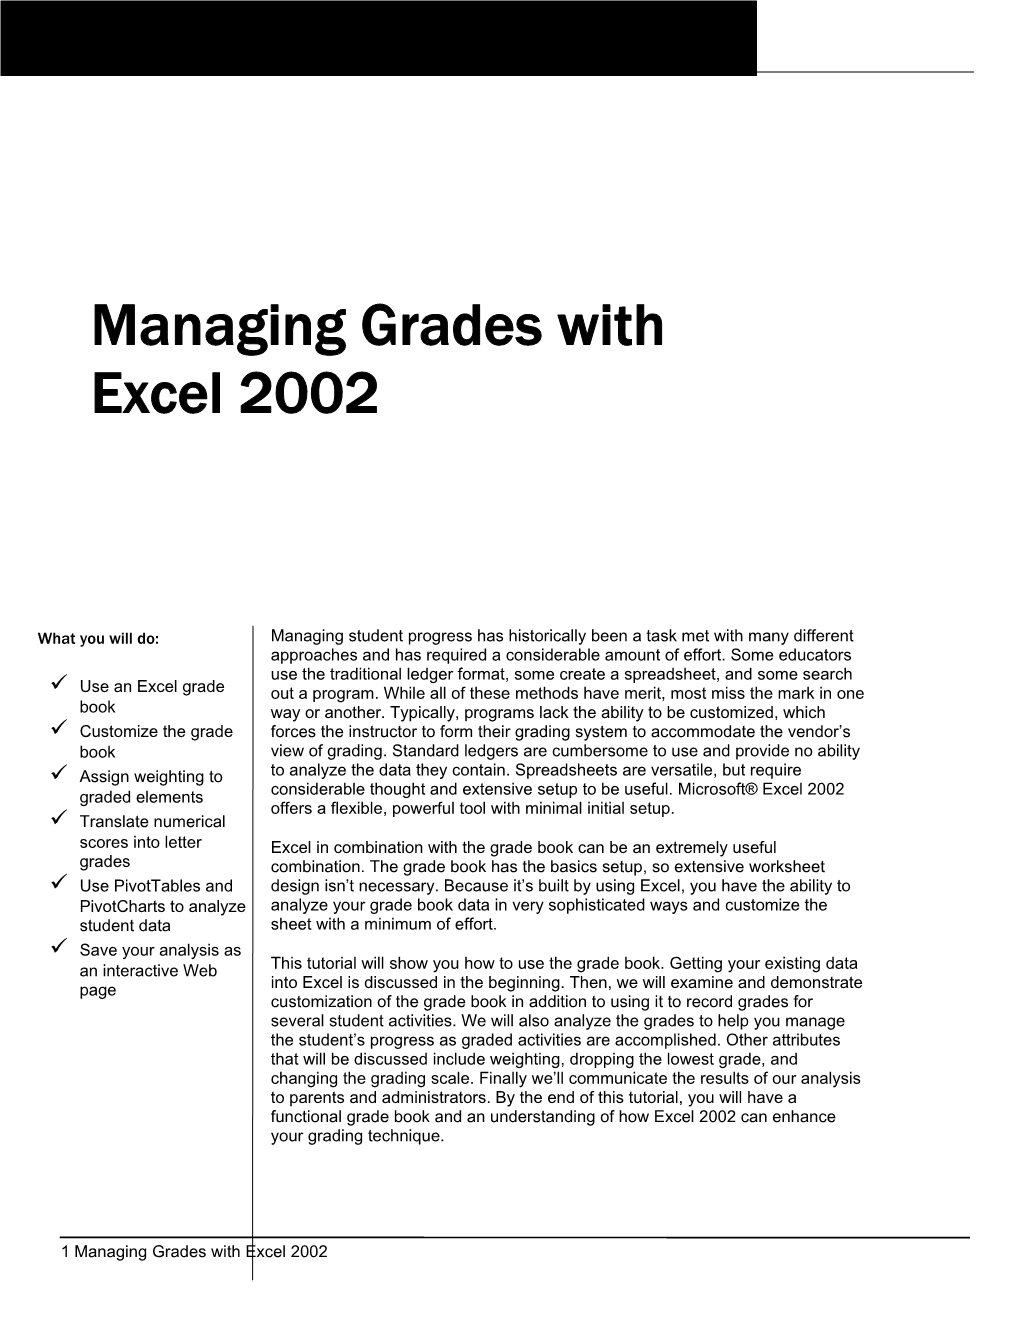 Managing Grades with Excel2002